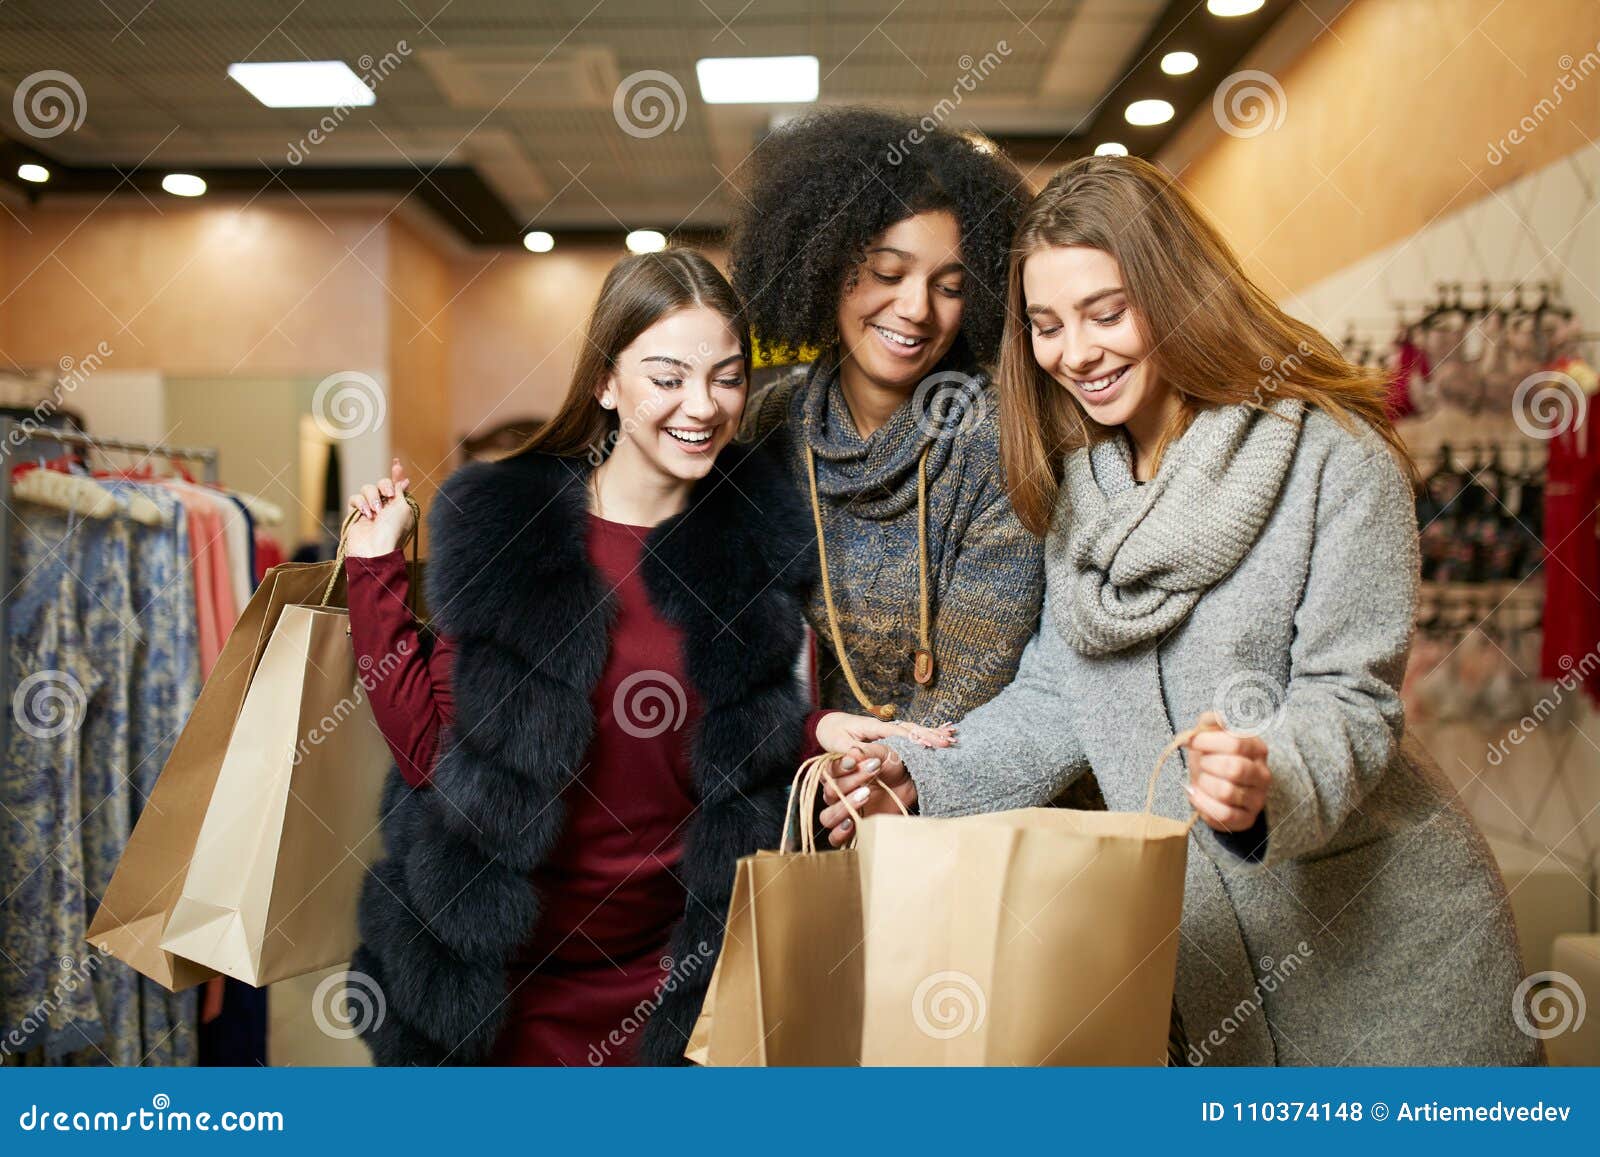 It girls wear It bags - i-D Concept Stores